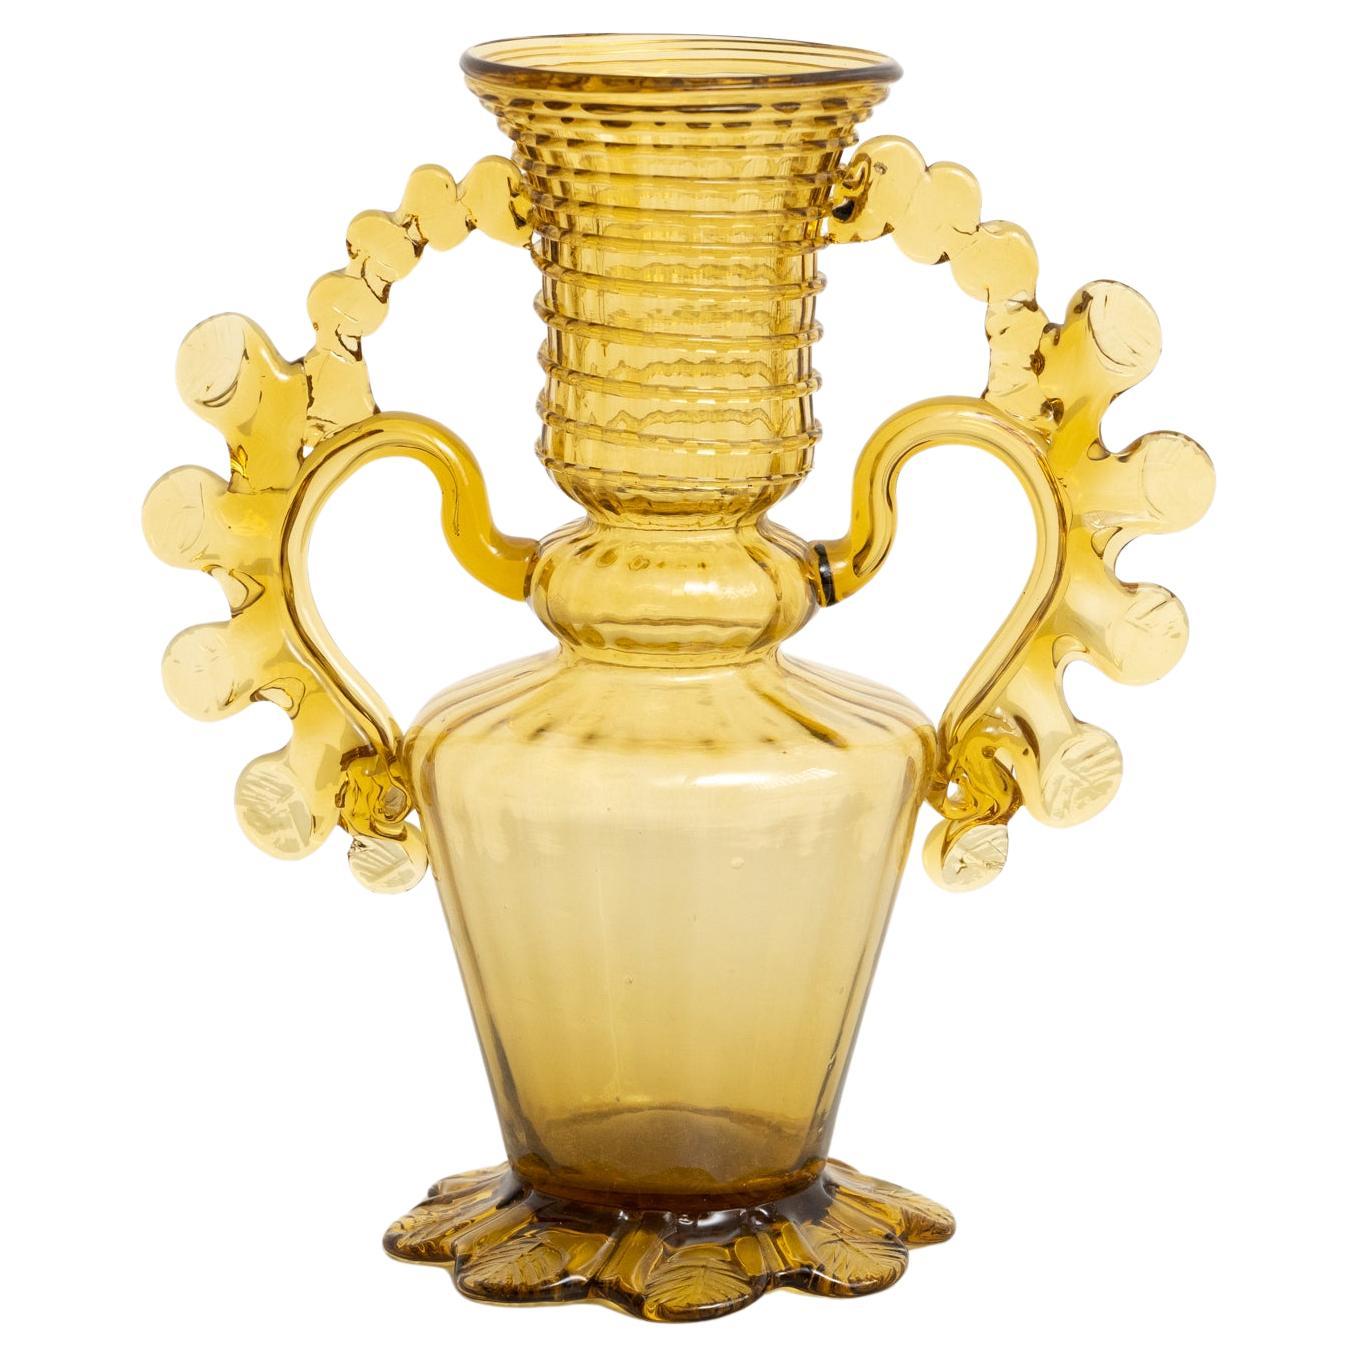 Elegant Amber Blown Glass Vase - Early 20th Century Spanish Artistry